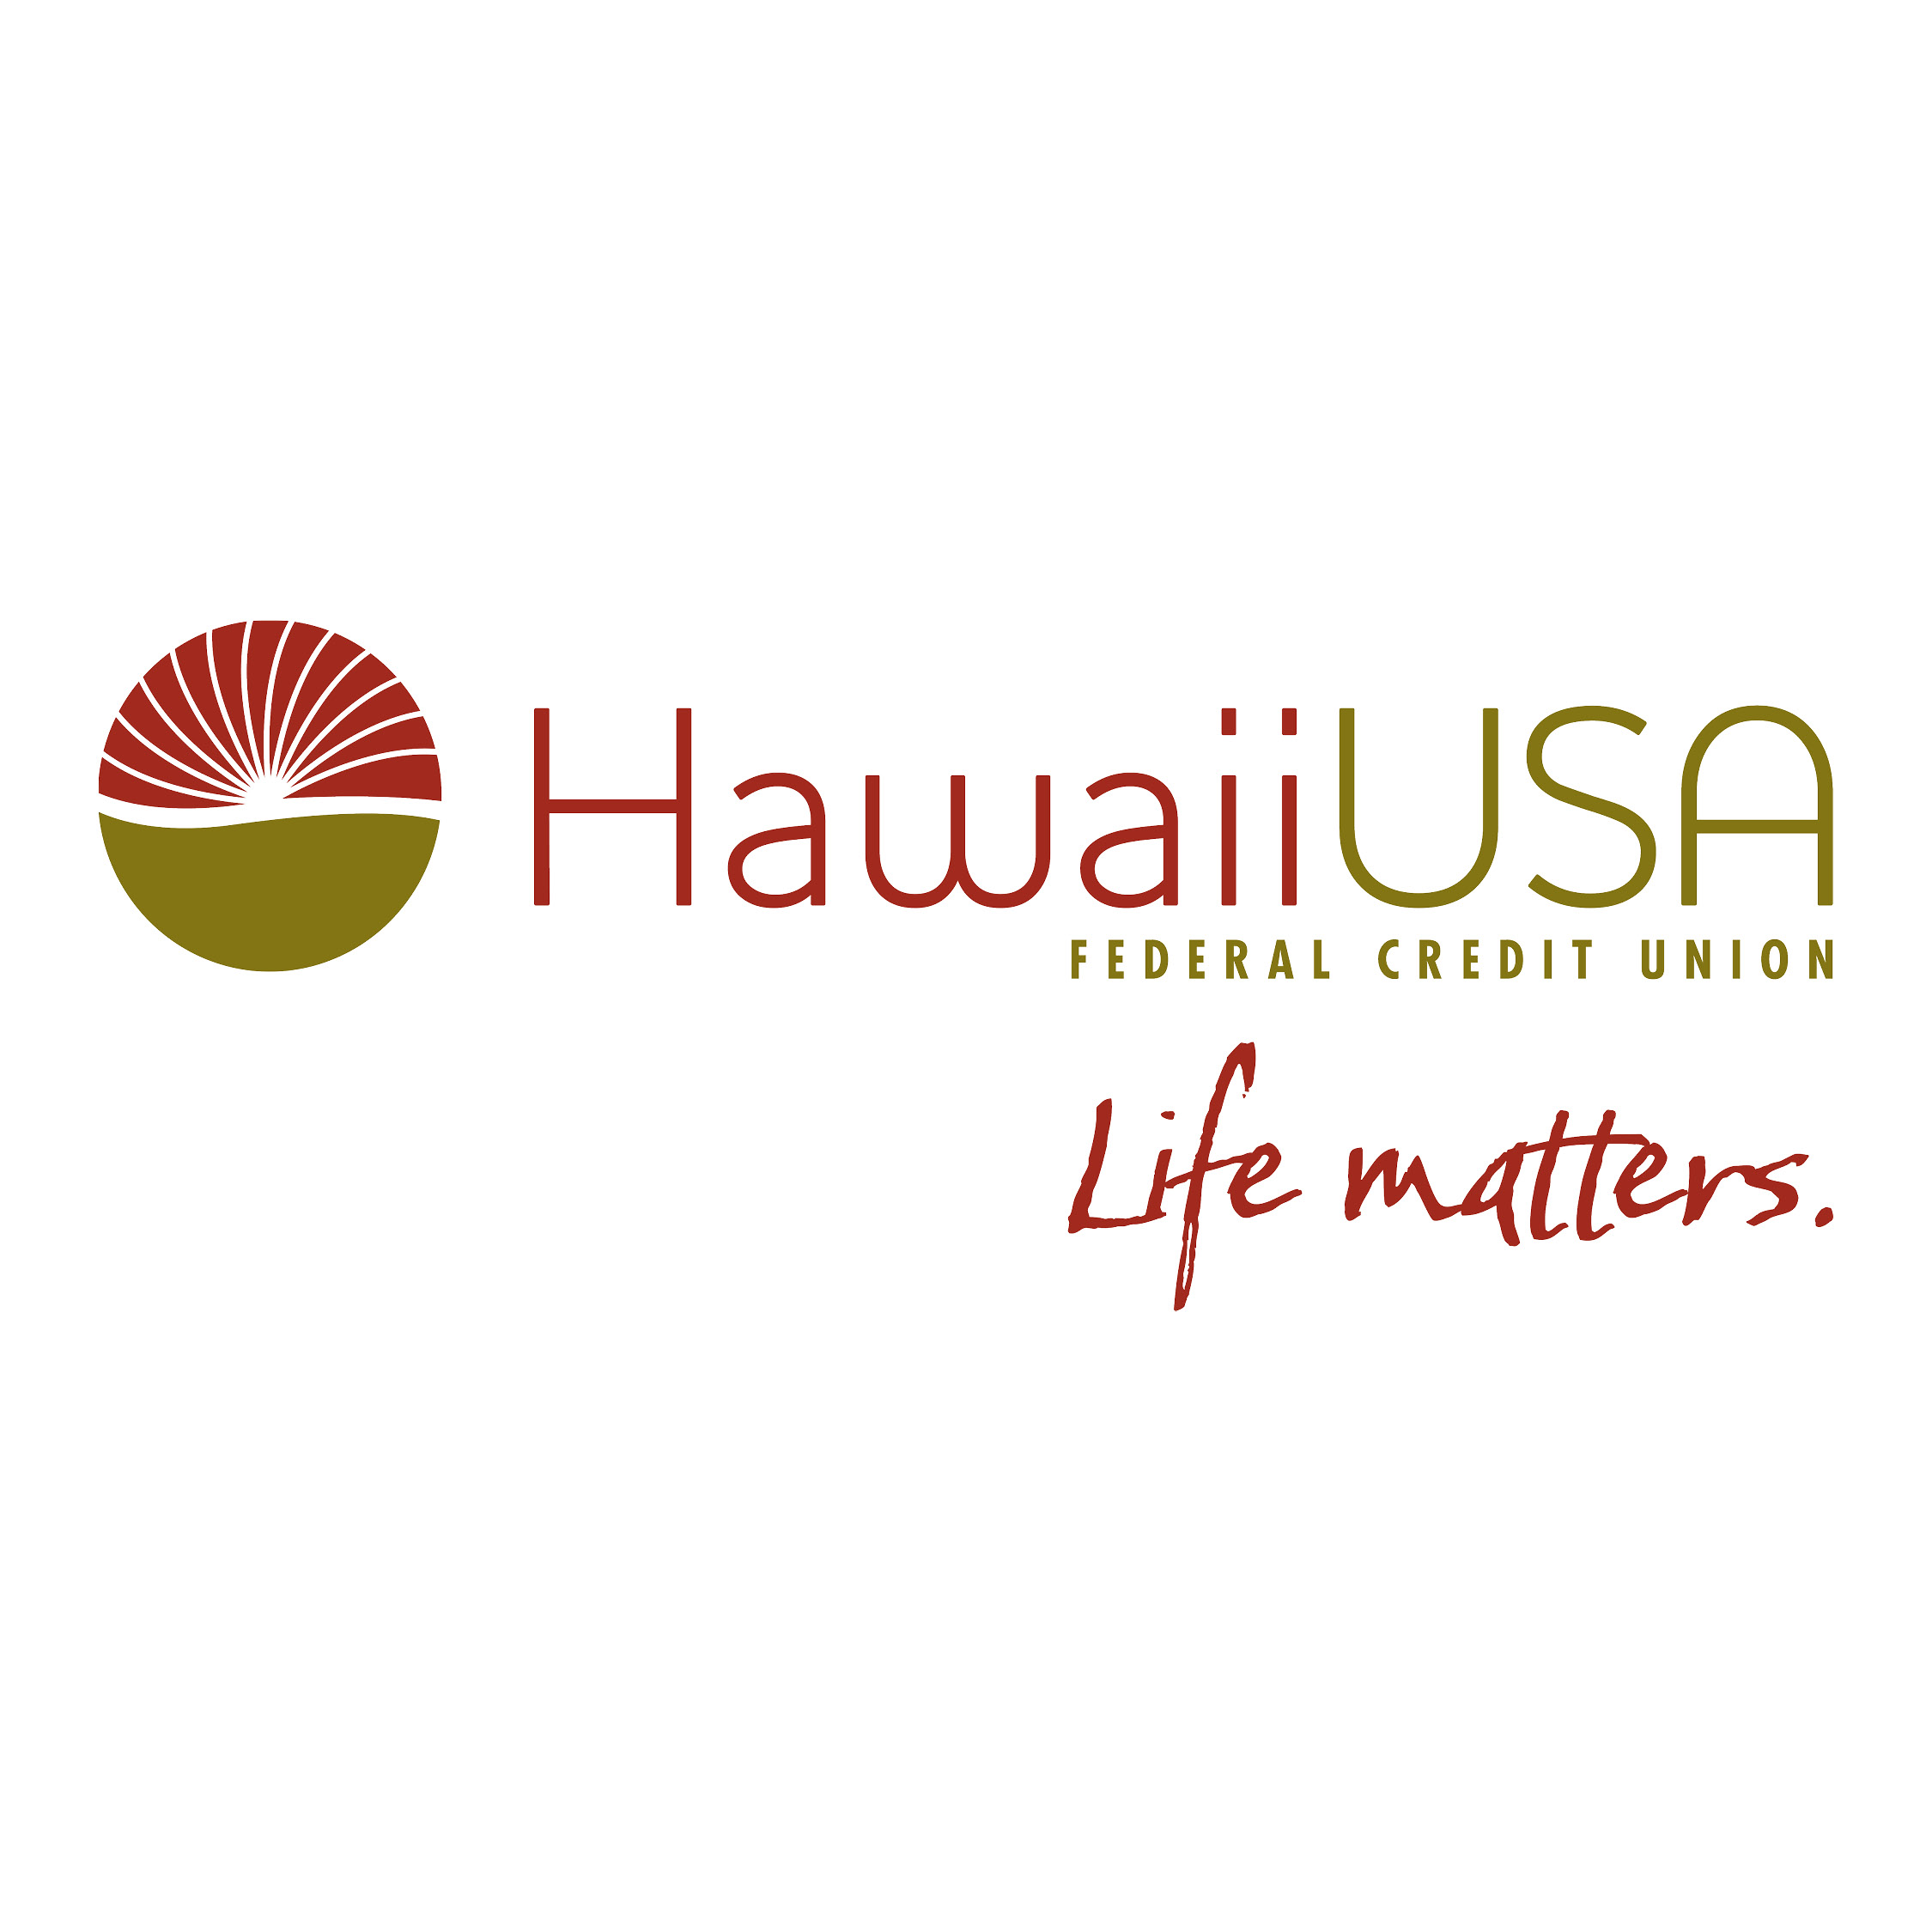 Hawaii USA FCU